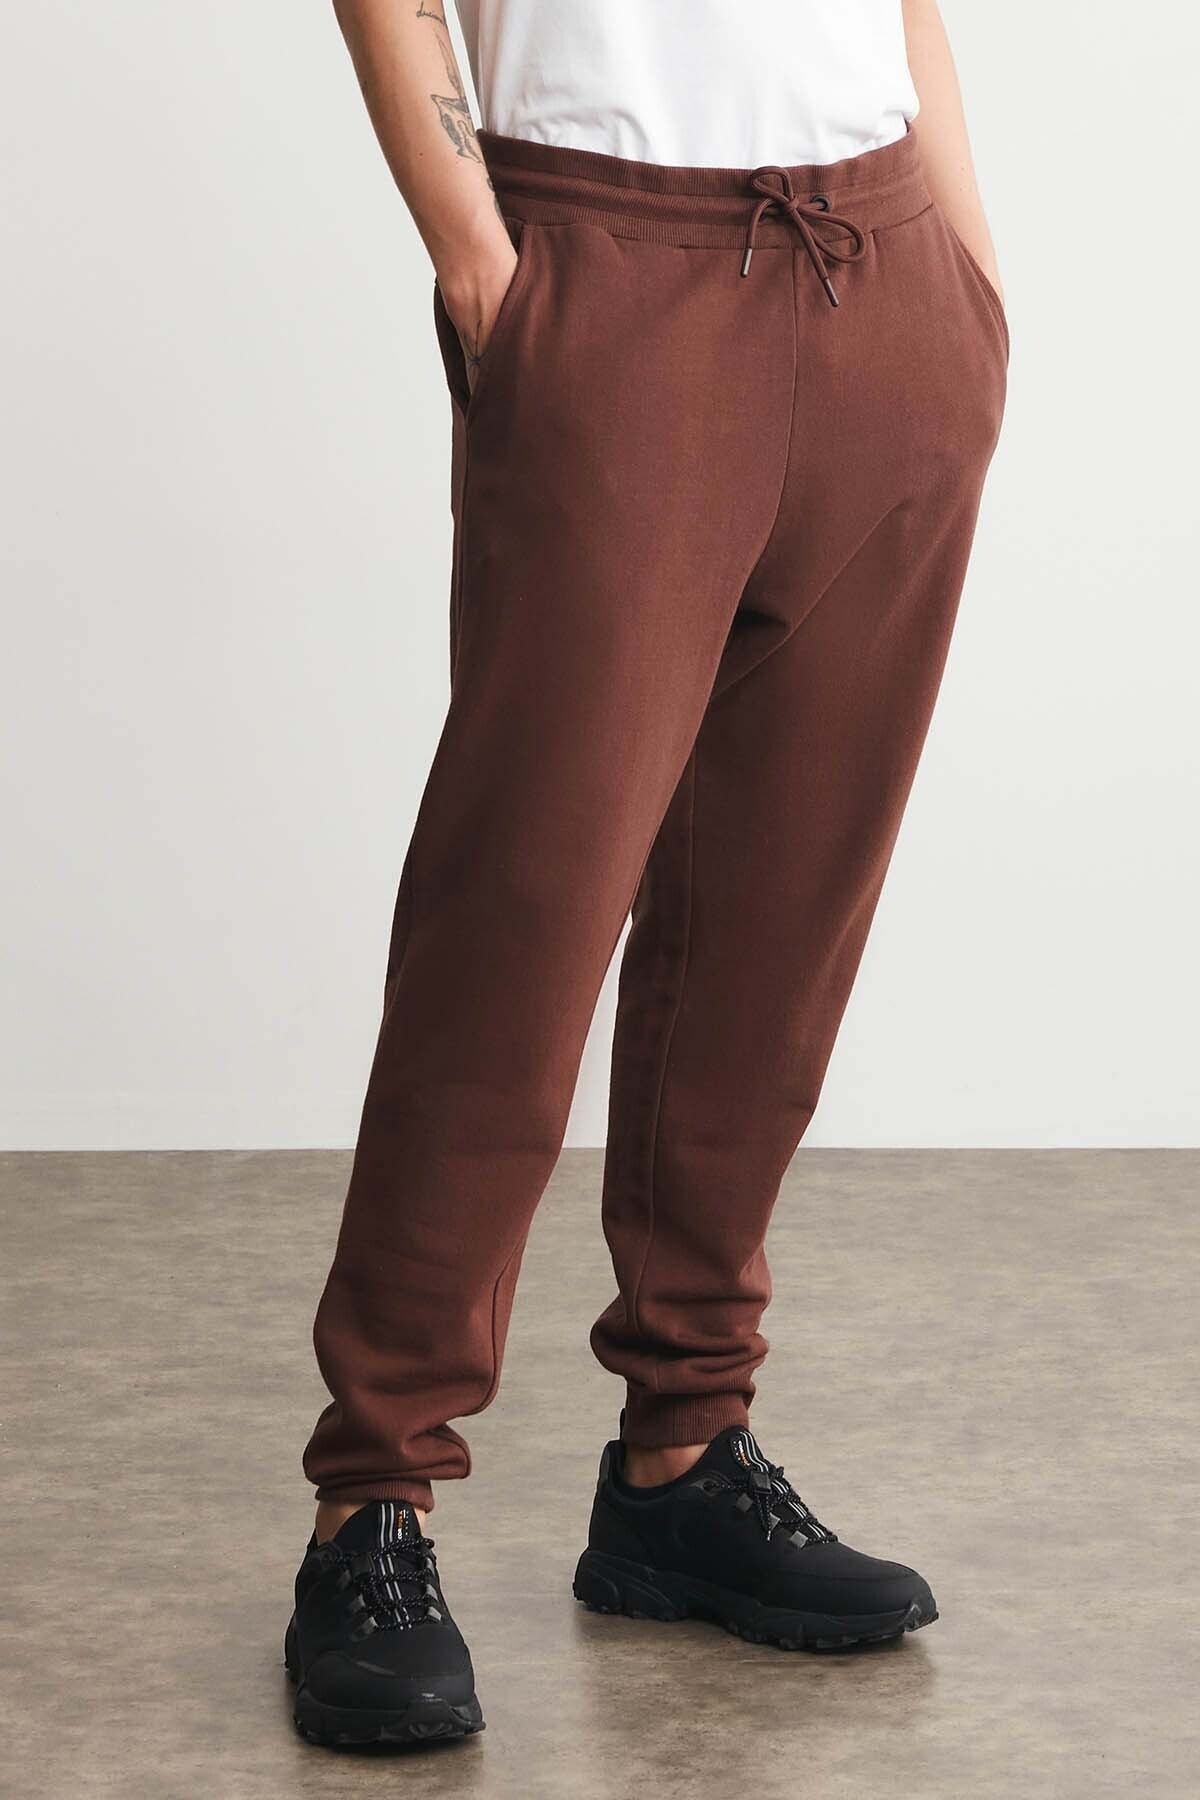 Levně GRIMELANGE Jeremiah Men's Regular Leg Flexible Fabric Burgundy Sweatpants with Lanyard Waist and Elastic Pockets